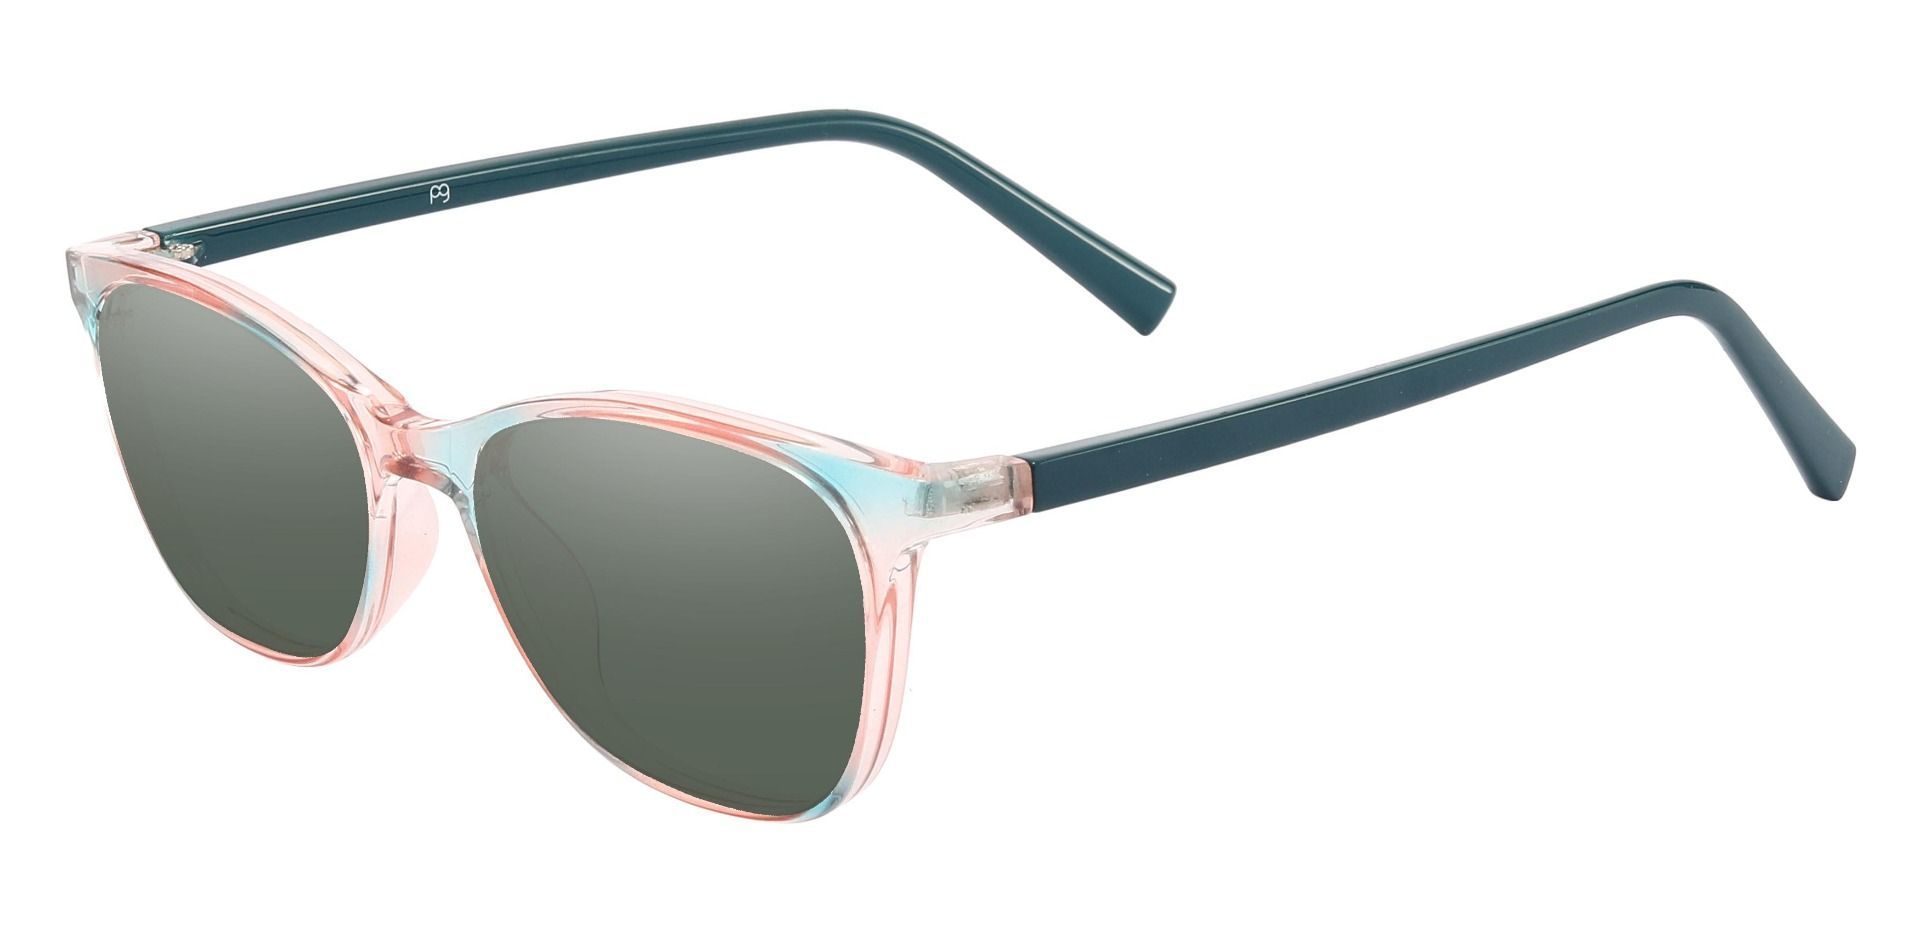 Bravo Rectangle Prescription Sunglasses - Green Frame With Green Lenses